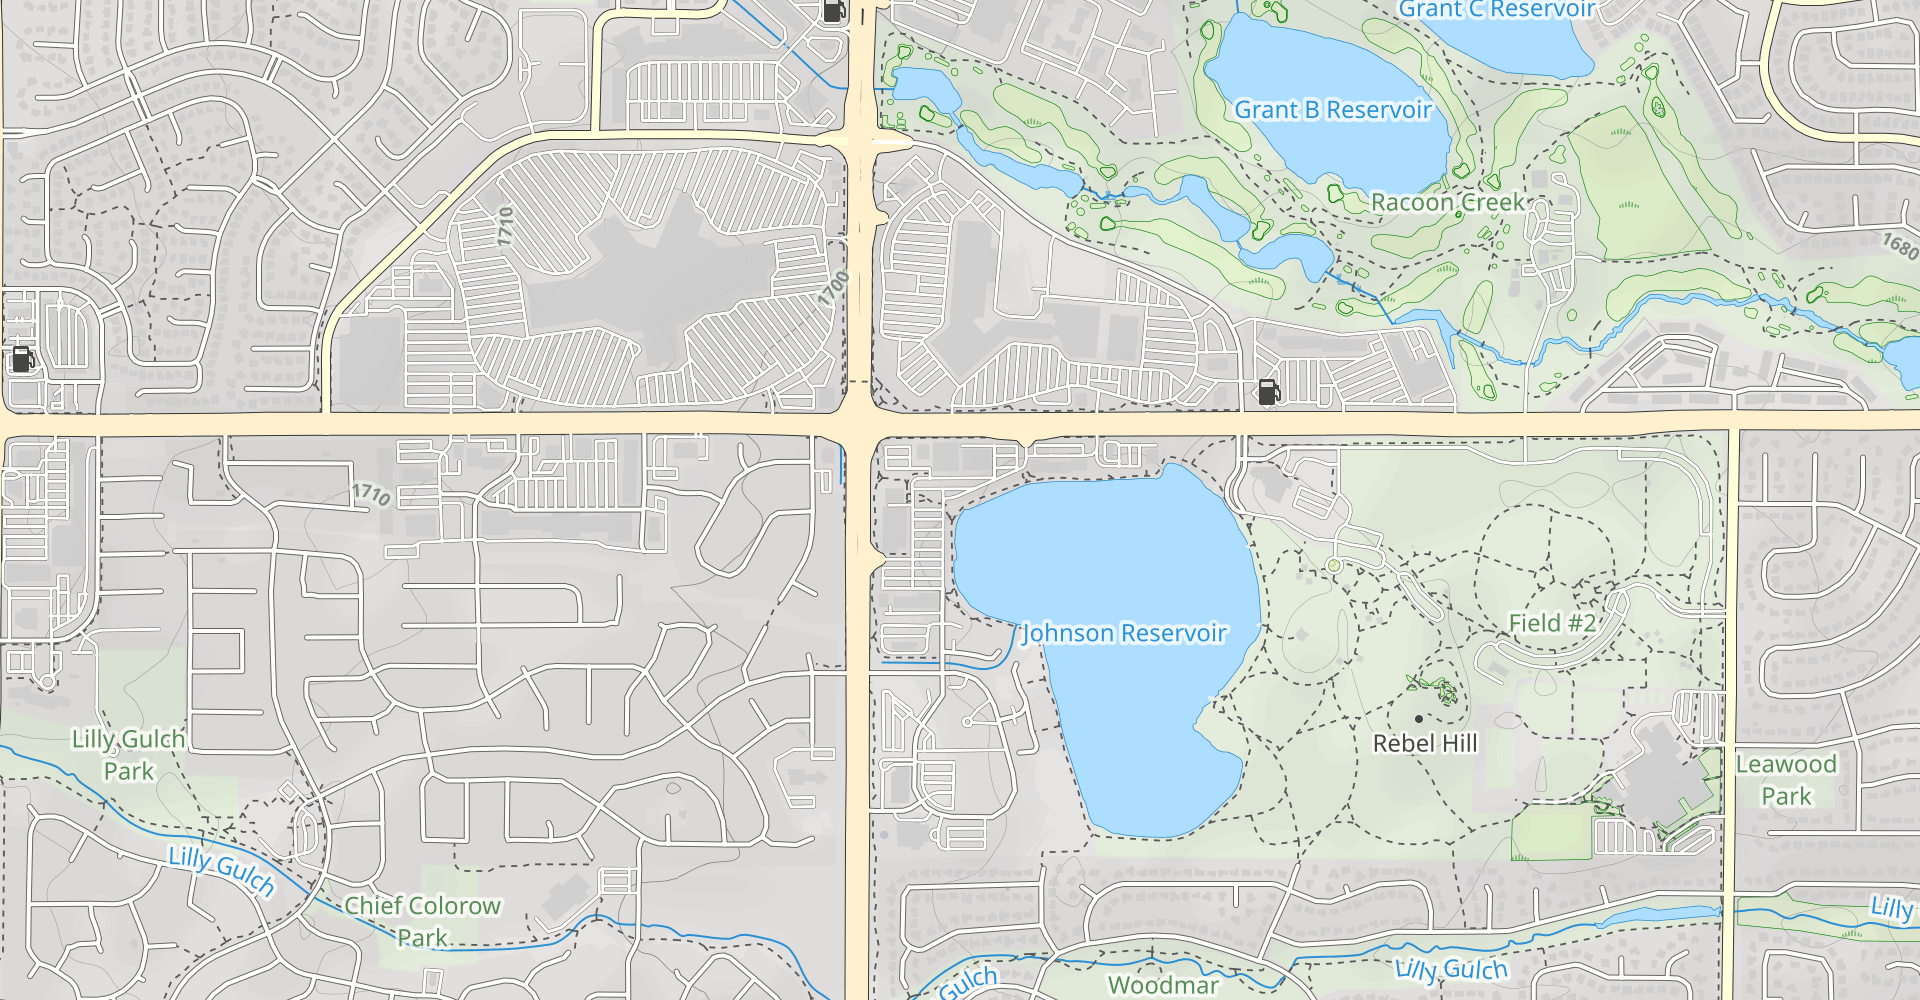 Johnson Reservoir and Clement Park Loop